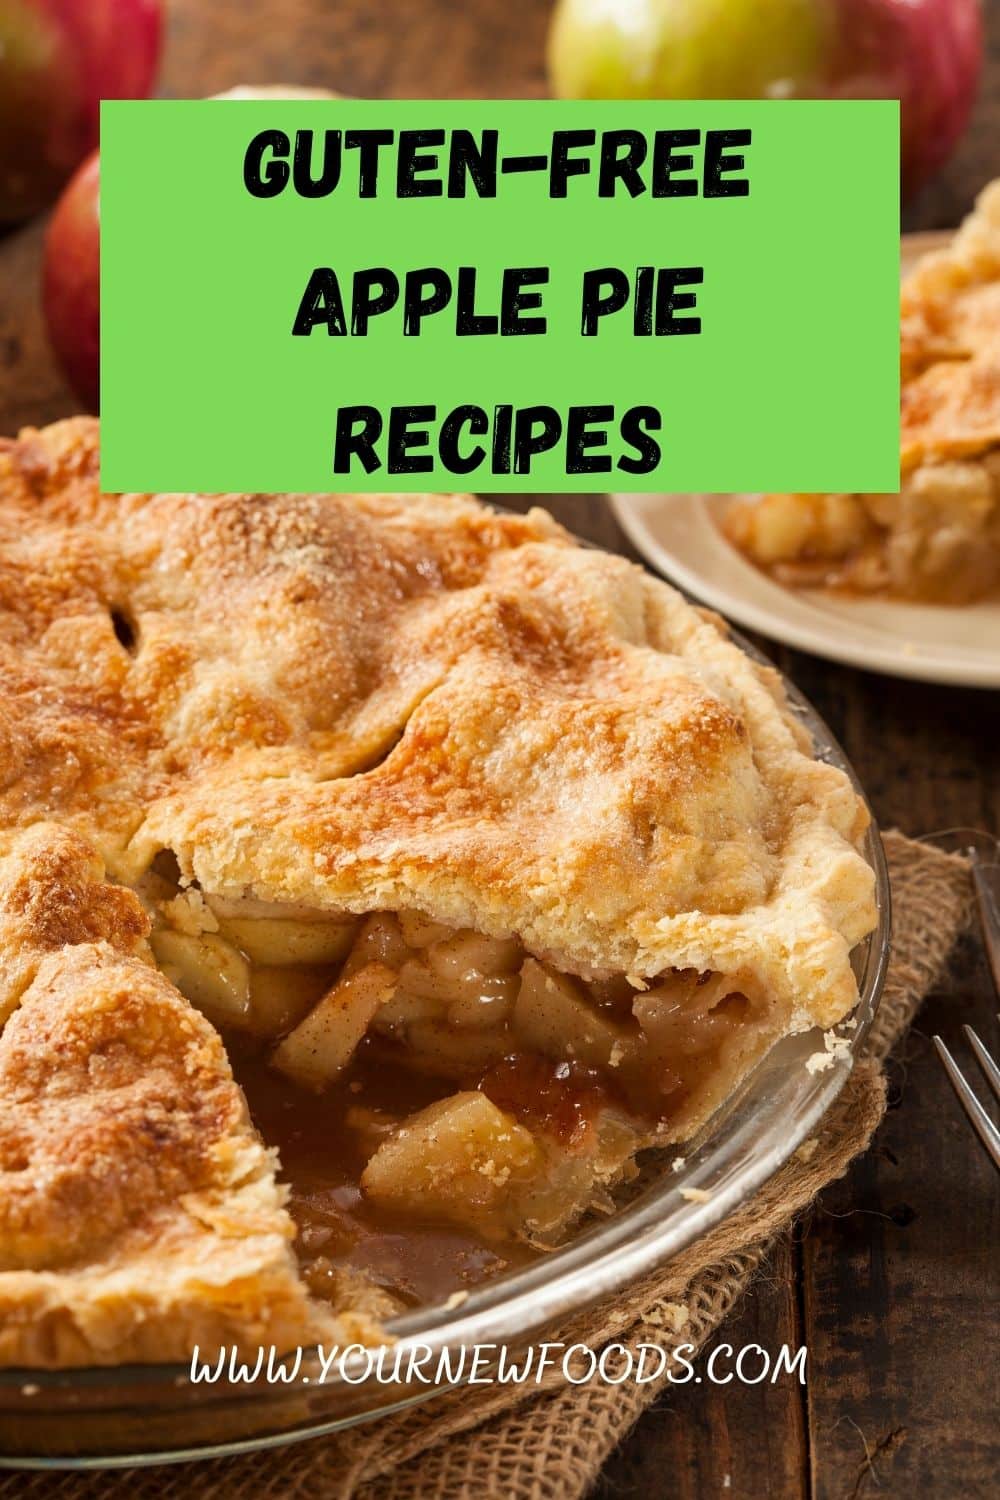 Guten-Free Apple Pie Recipes